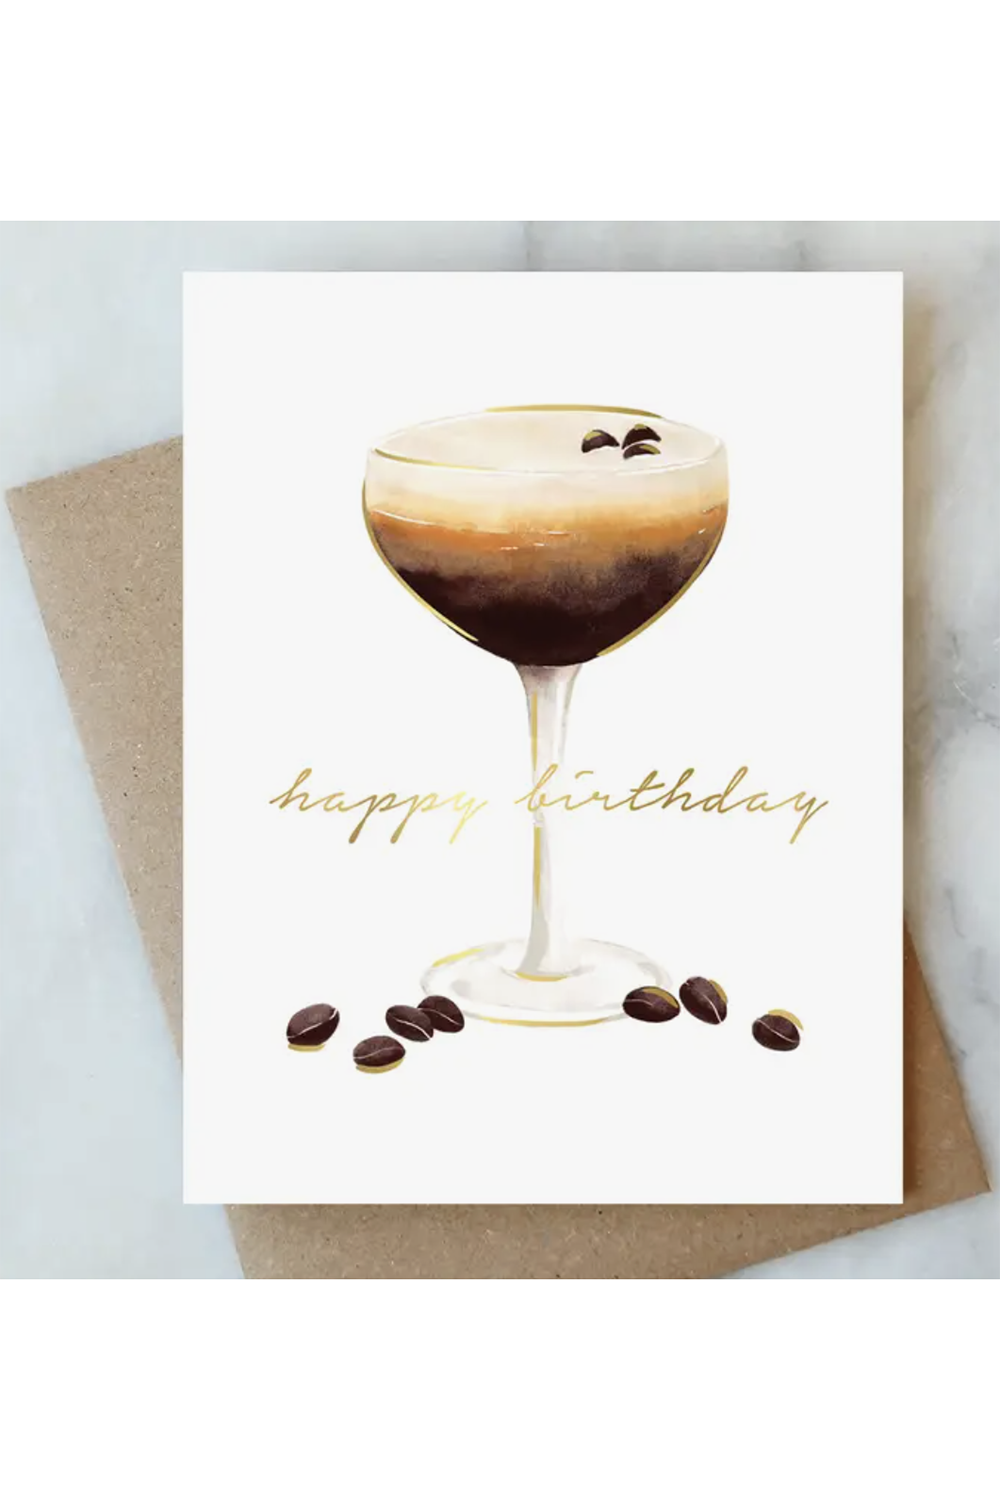 AJD Birthday Card - Espresso Martini